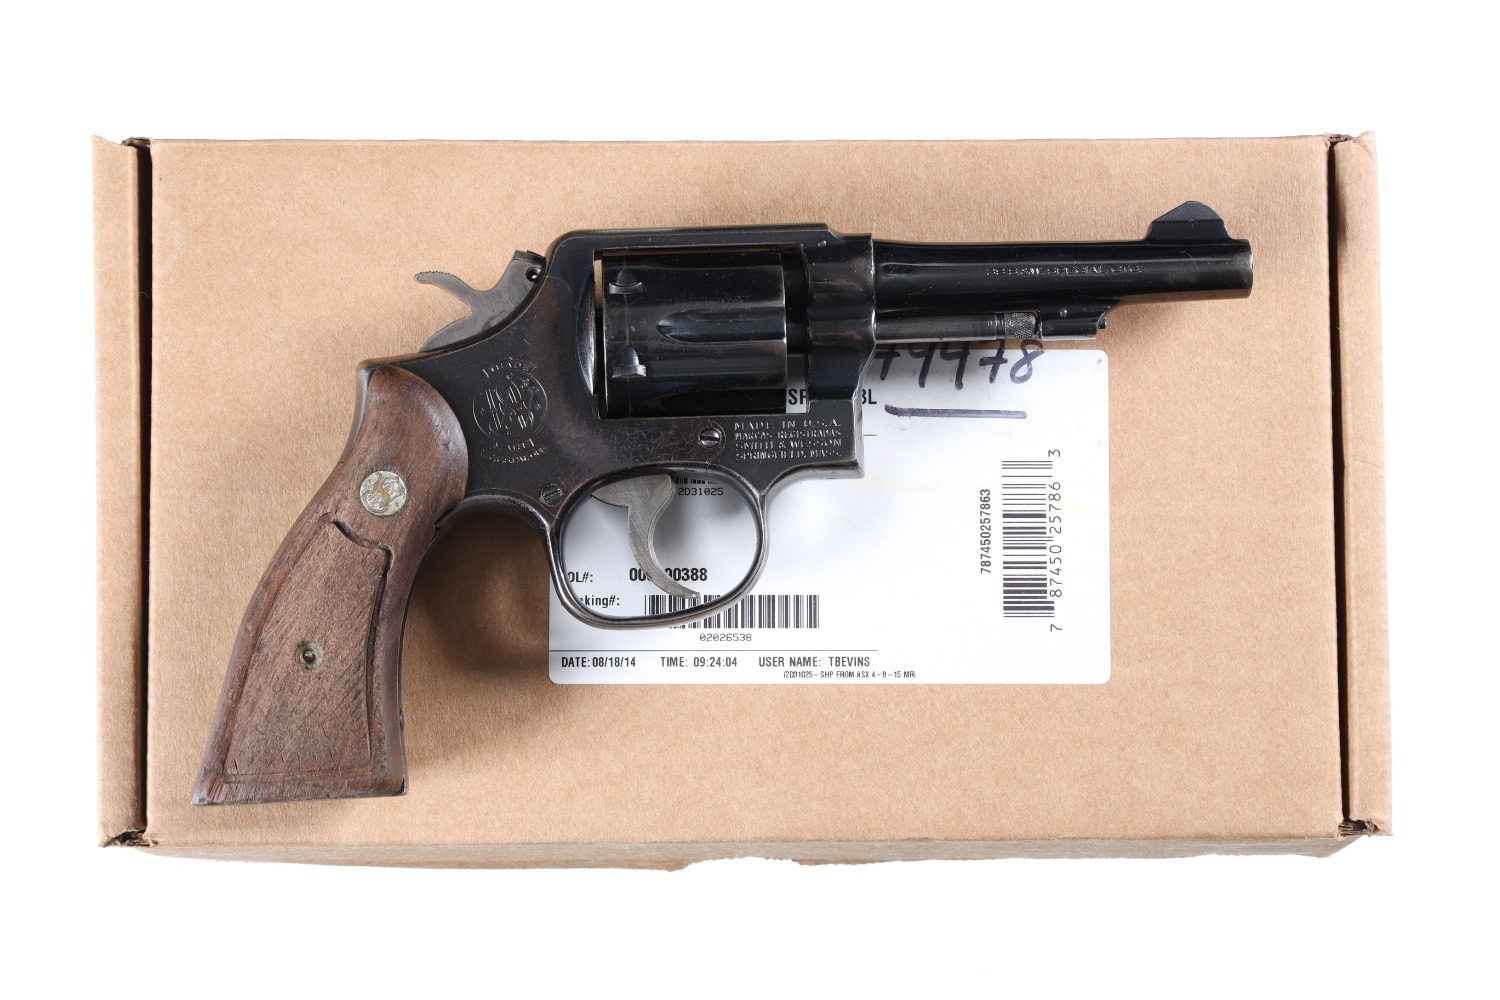 Smith & Wesson 10 5 Revolver .38 spl